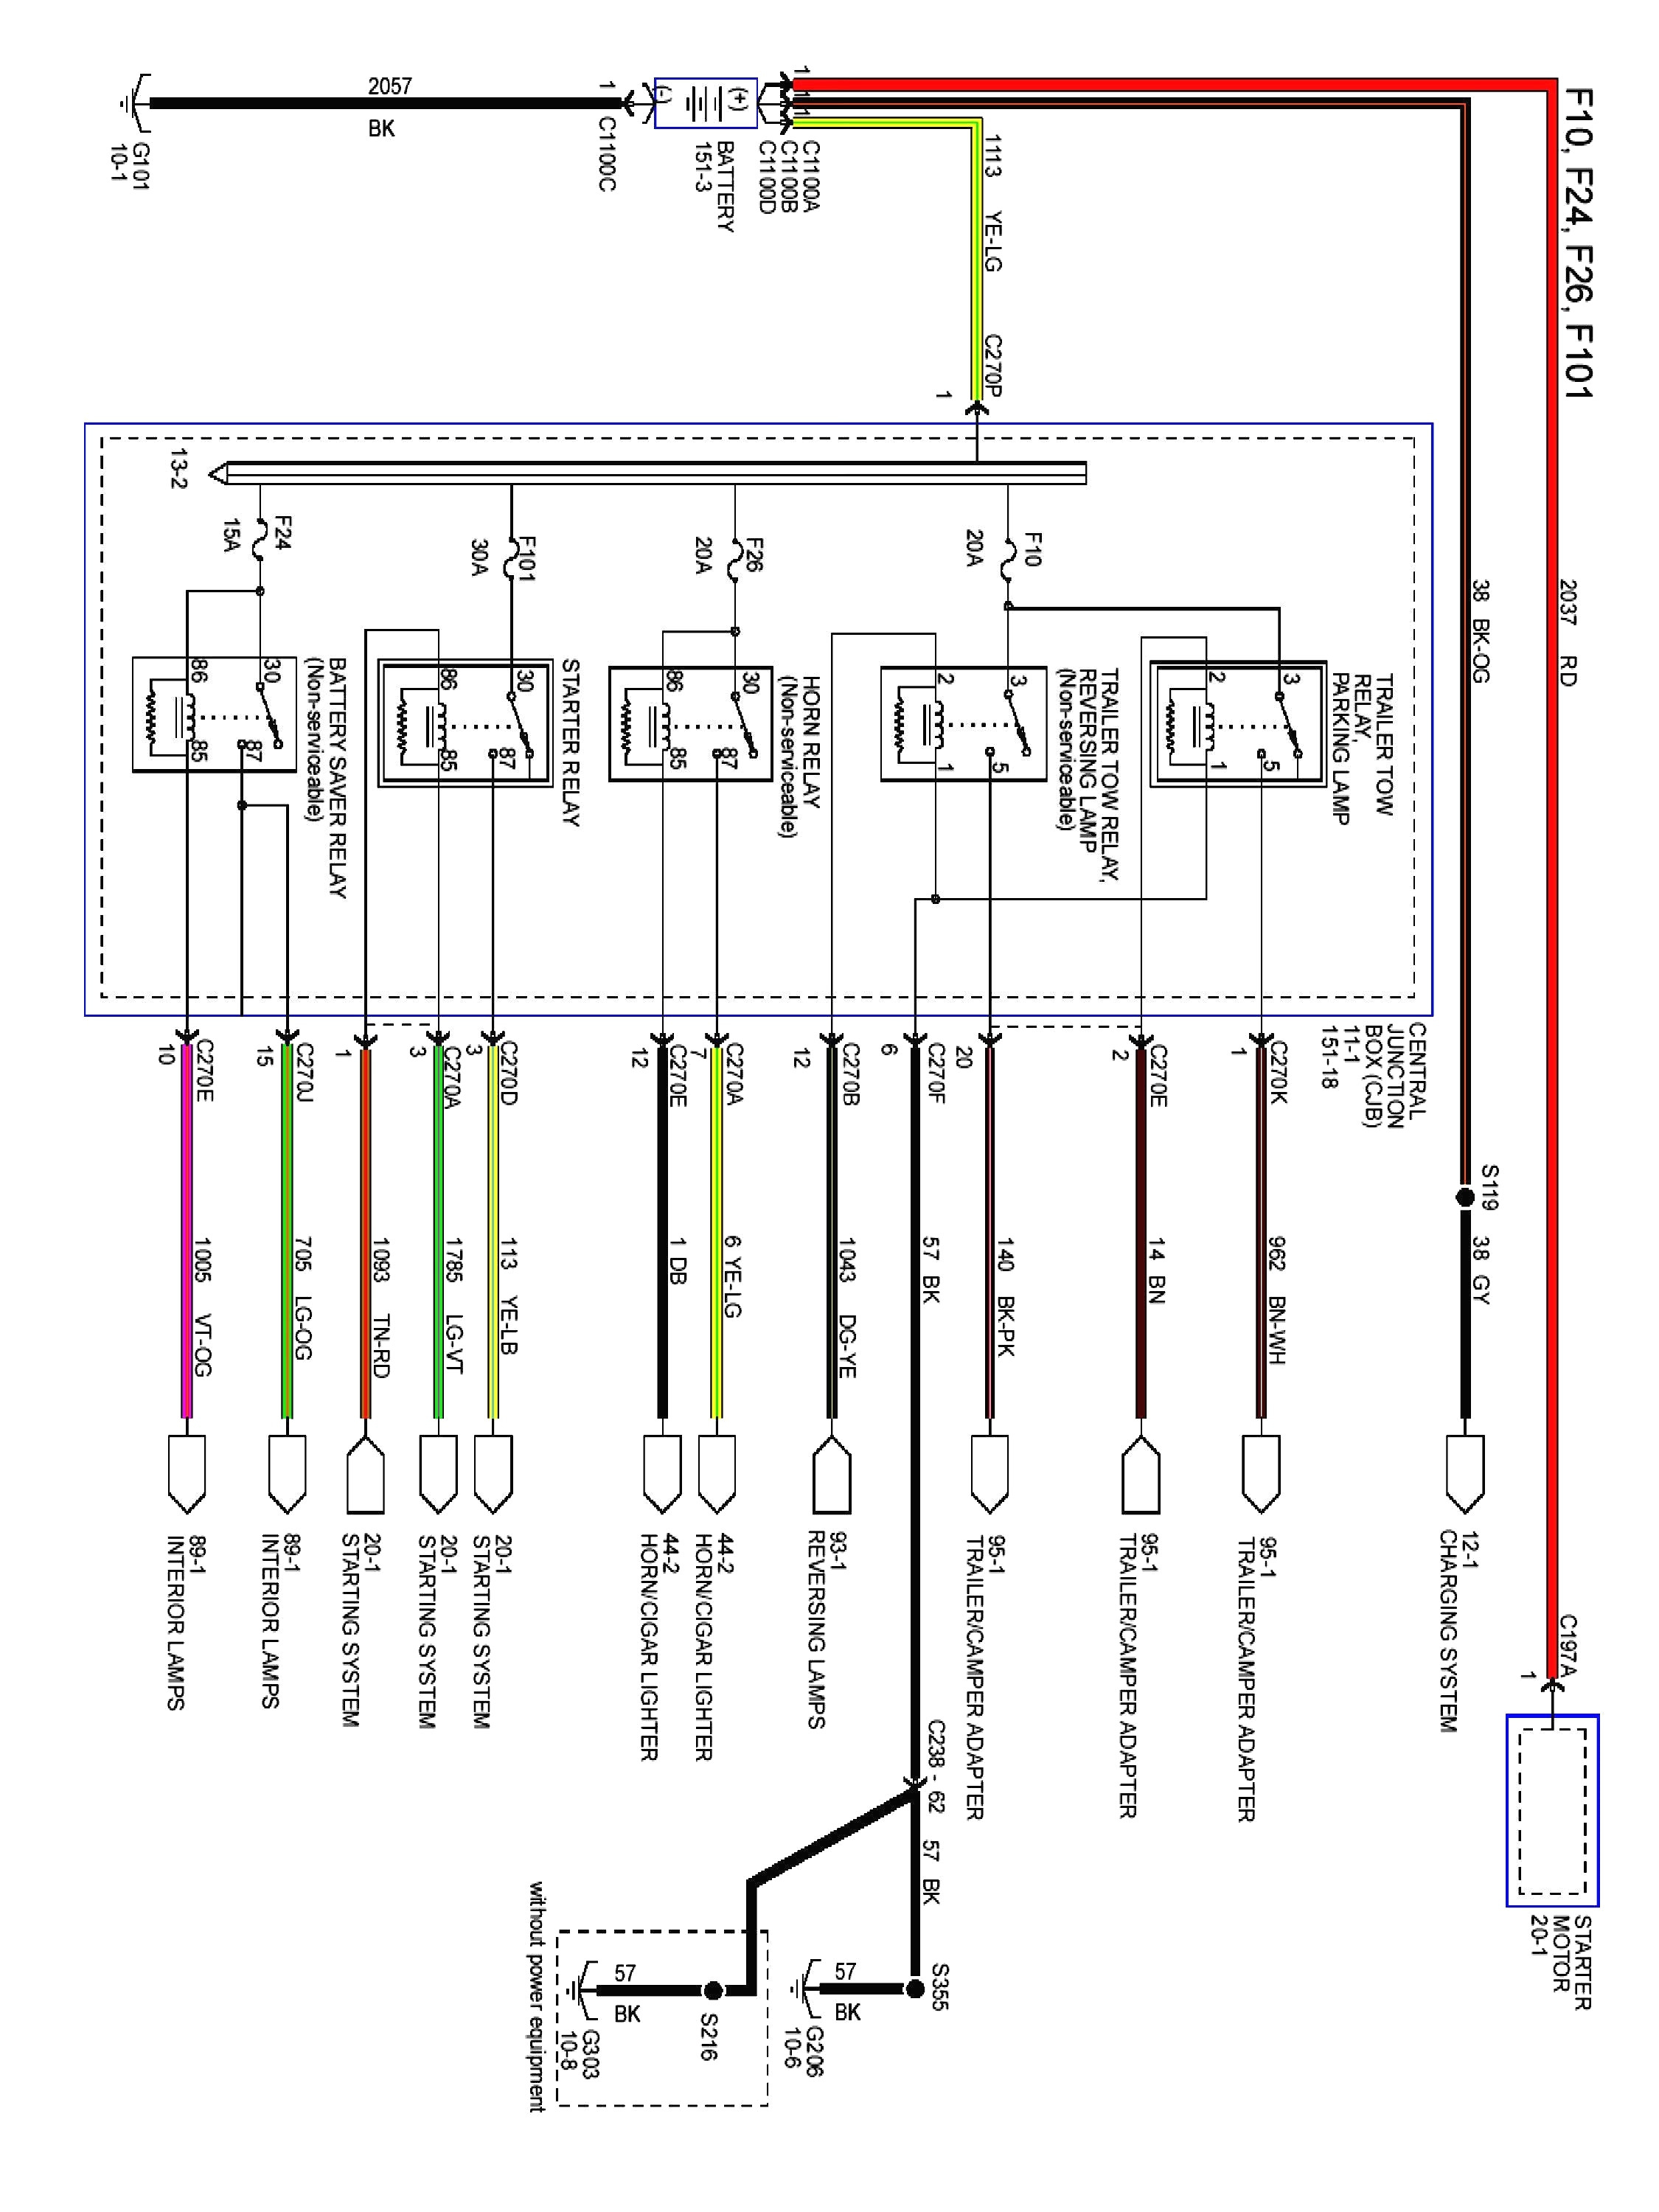 94 saturn wiring diagram wiring diagrams 1994 saturn wiring diagram wiring diagram datasource 94 saturn wiring